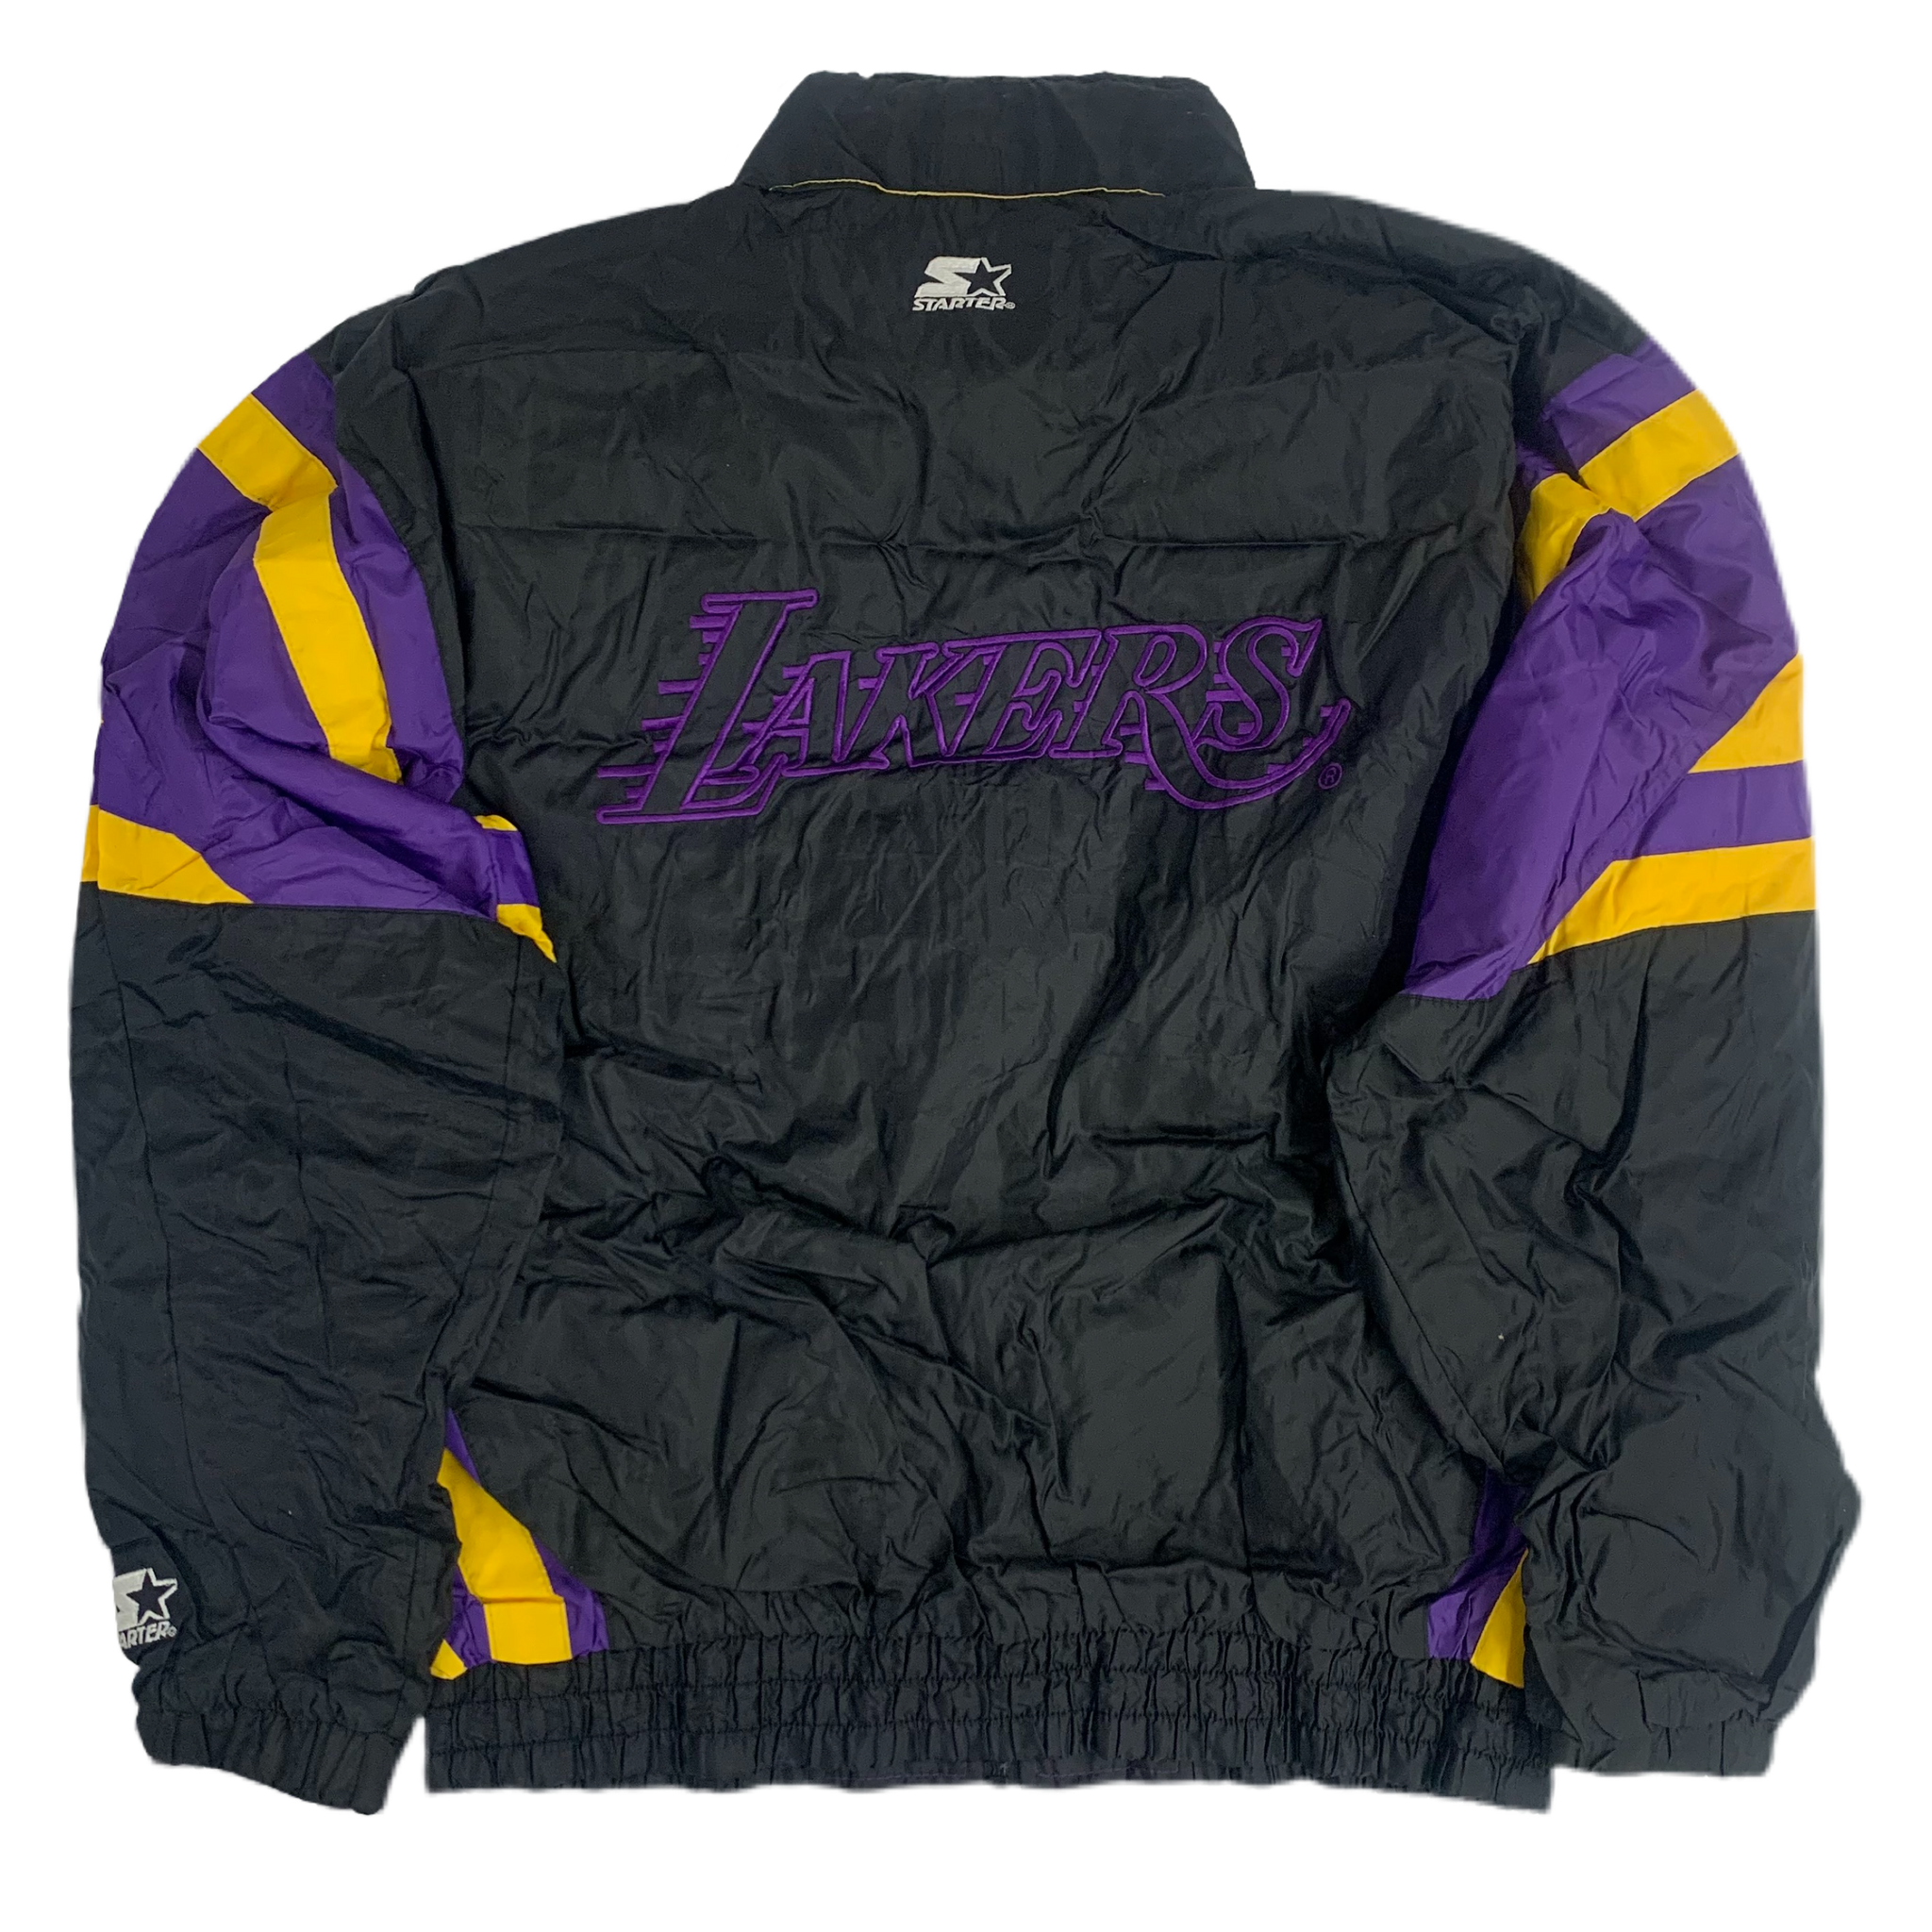 Vintage 90s Nylon Purple Starter Lakers Windbreaker Jacket